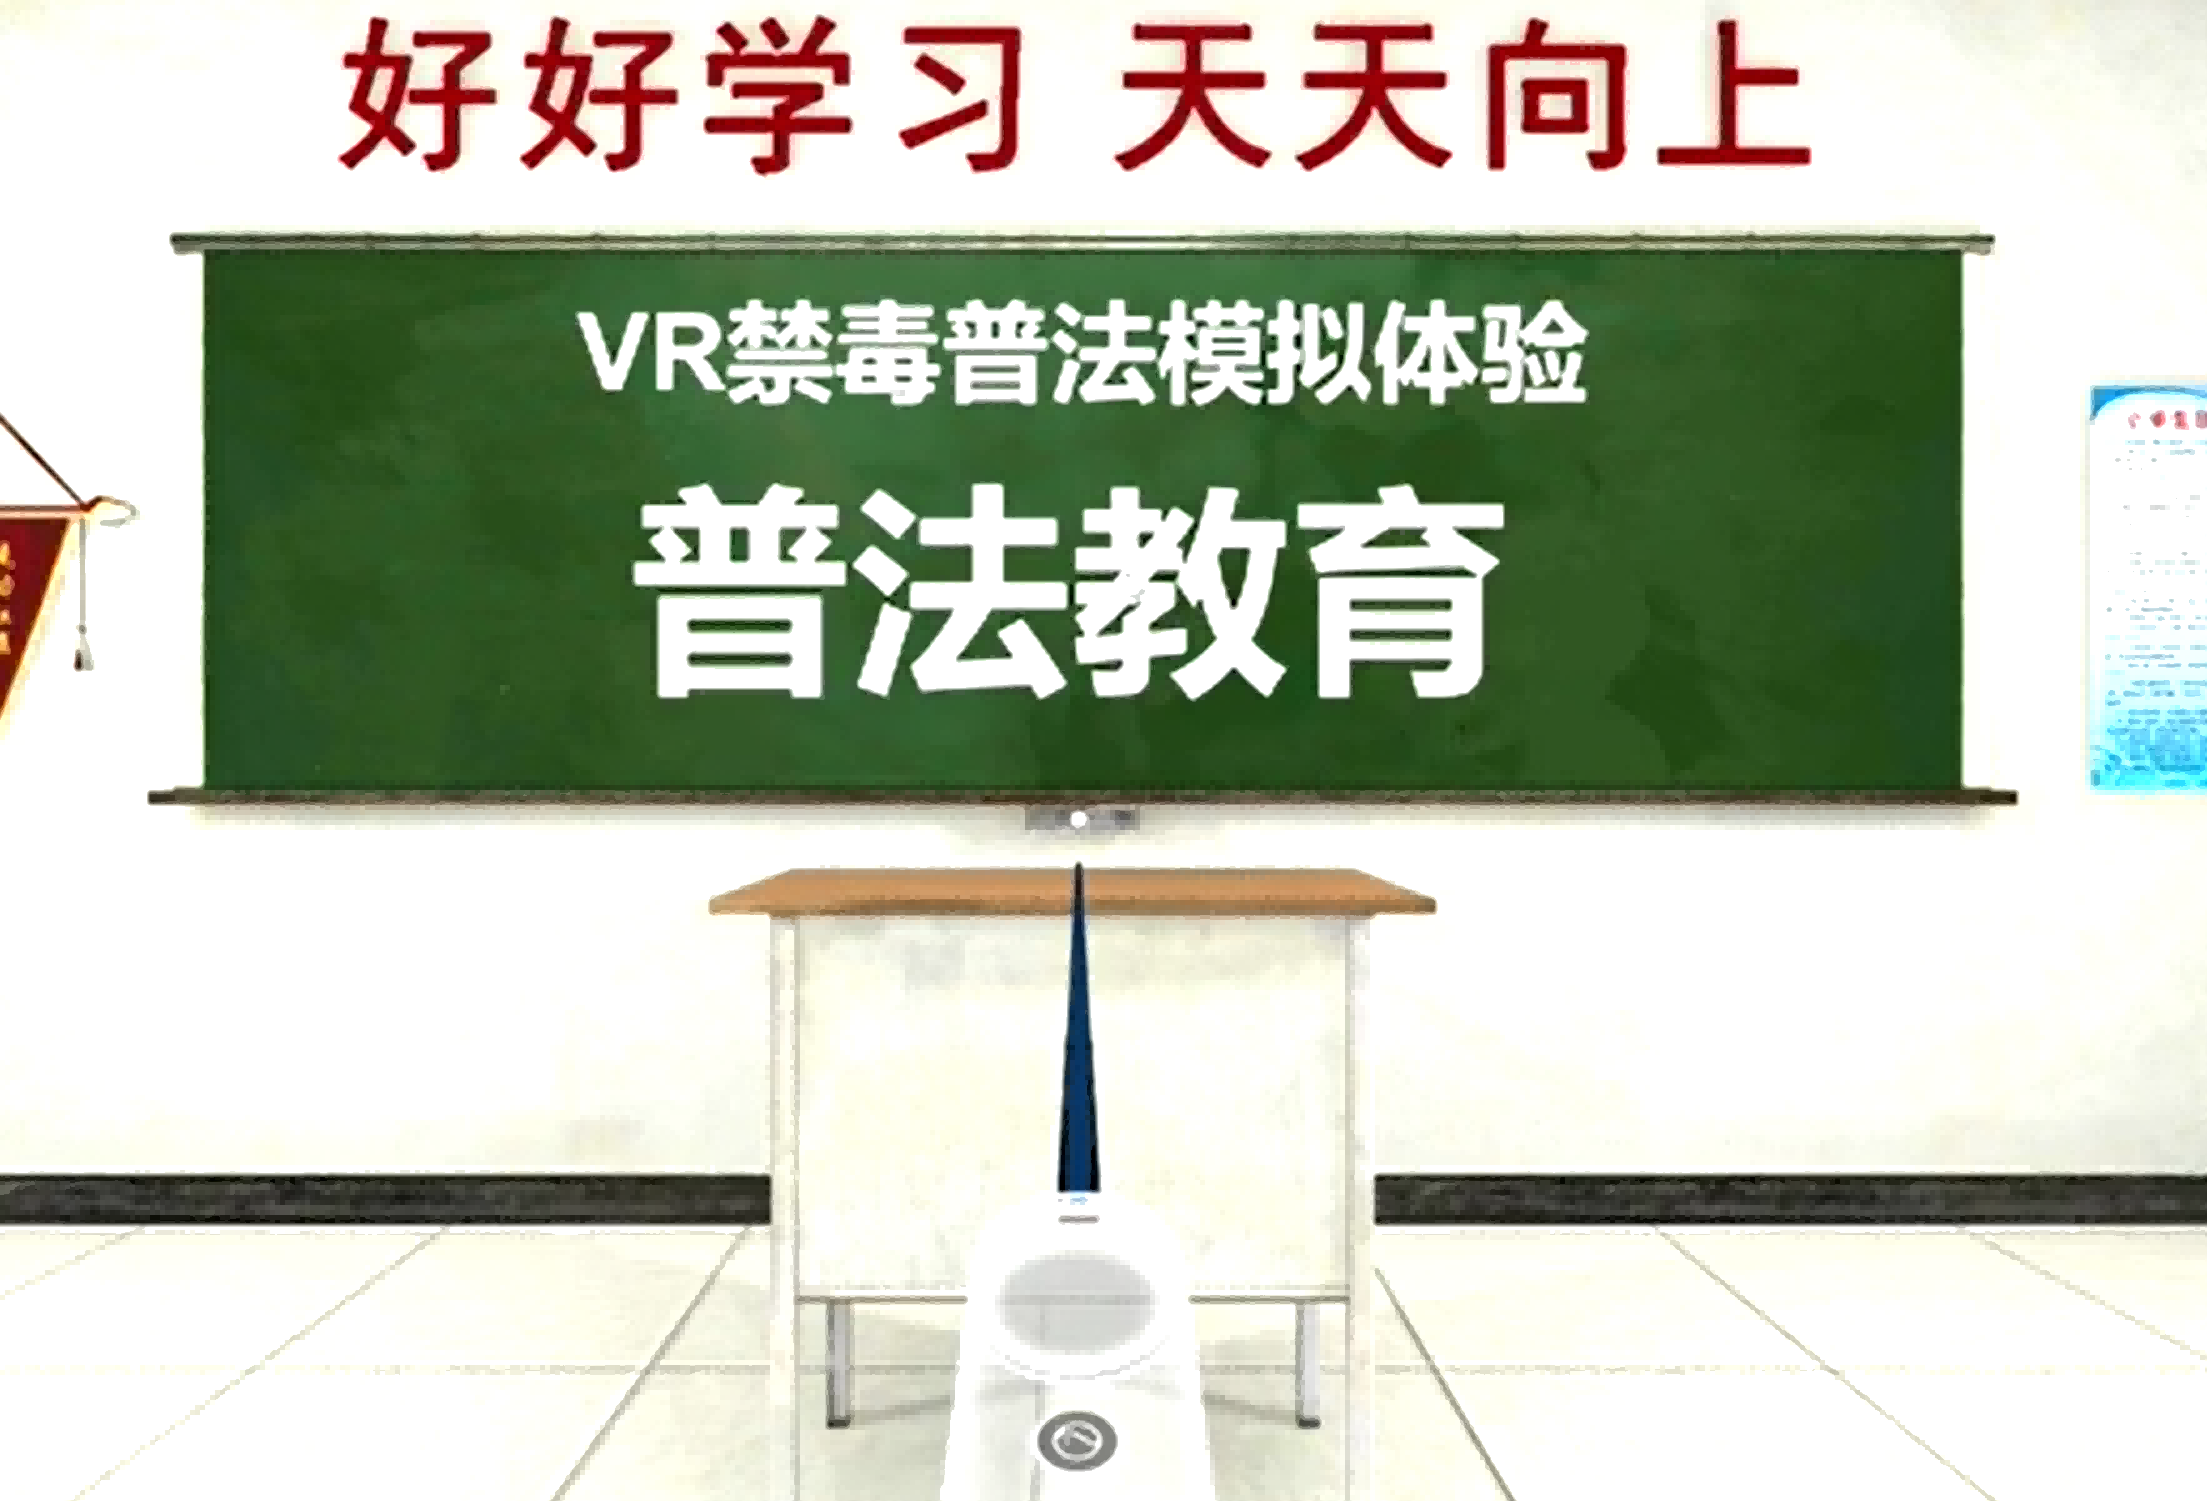 VR禁毒普法模拟体验系统,禁毒教育体验馆,禁毒教育展厅,禁毒科普馆.png